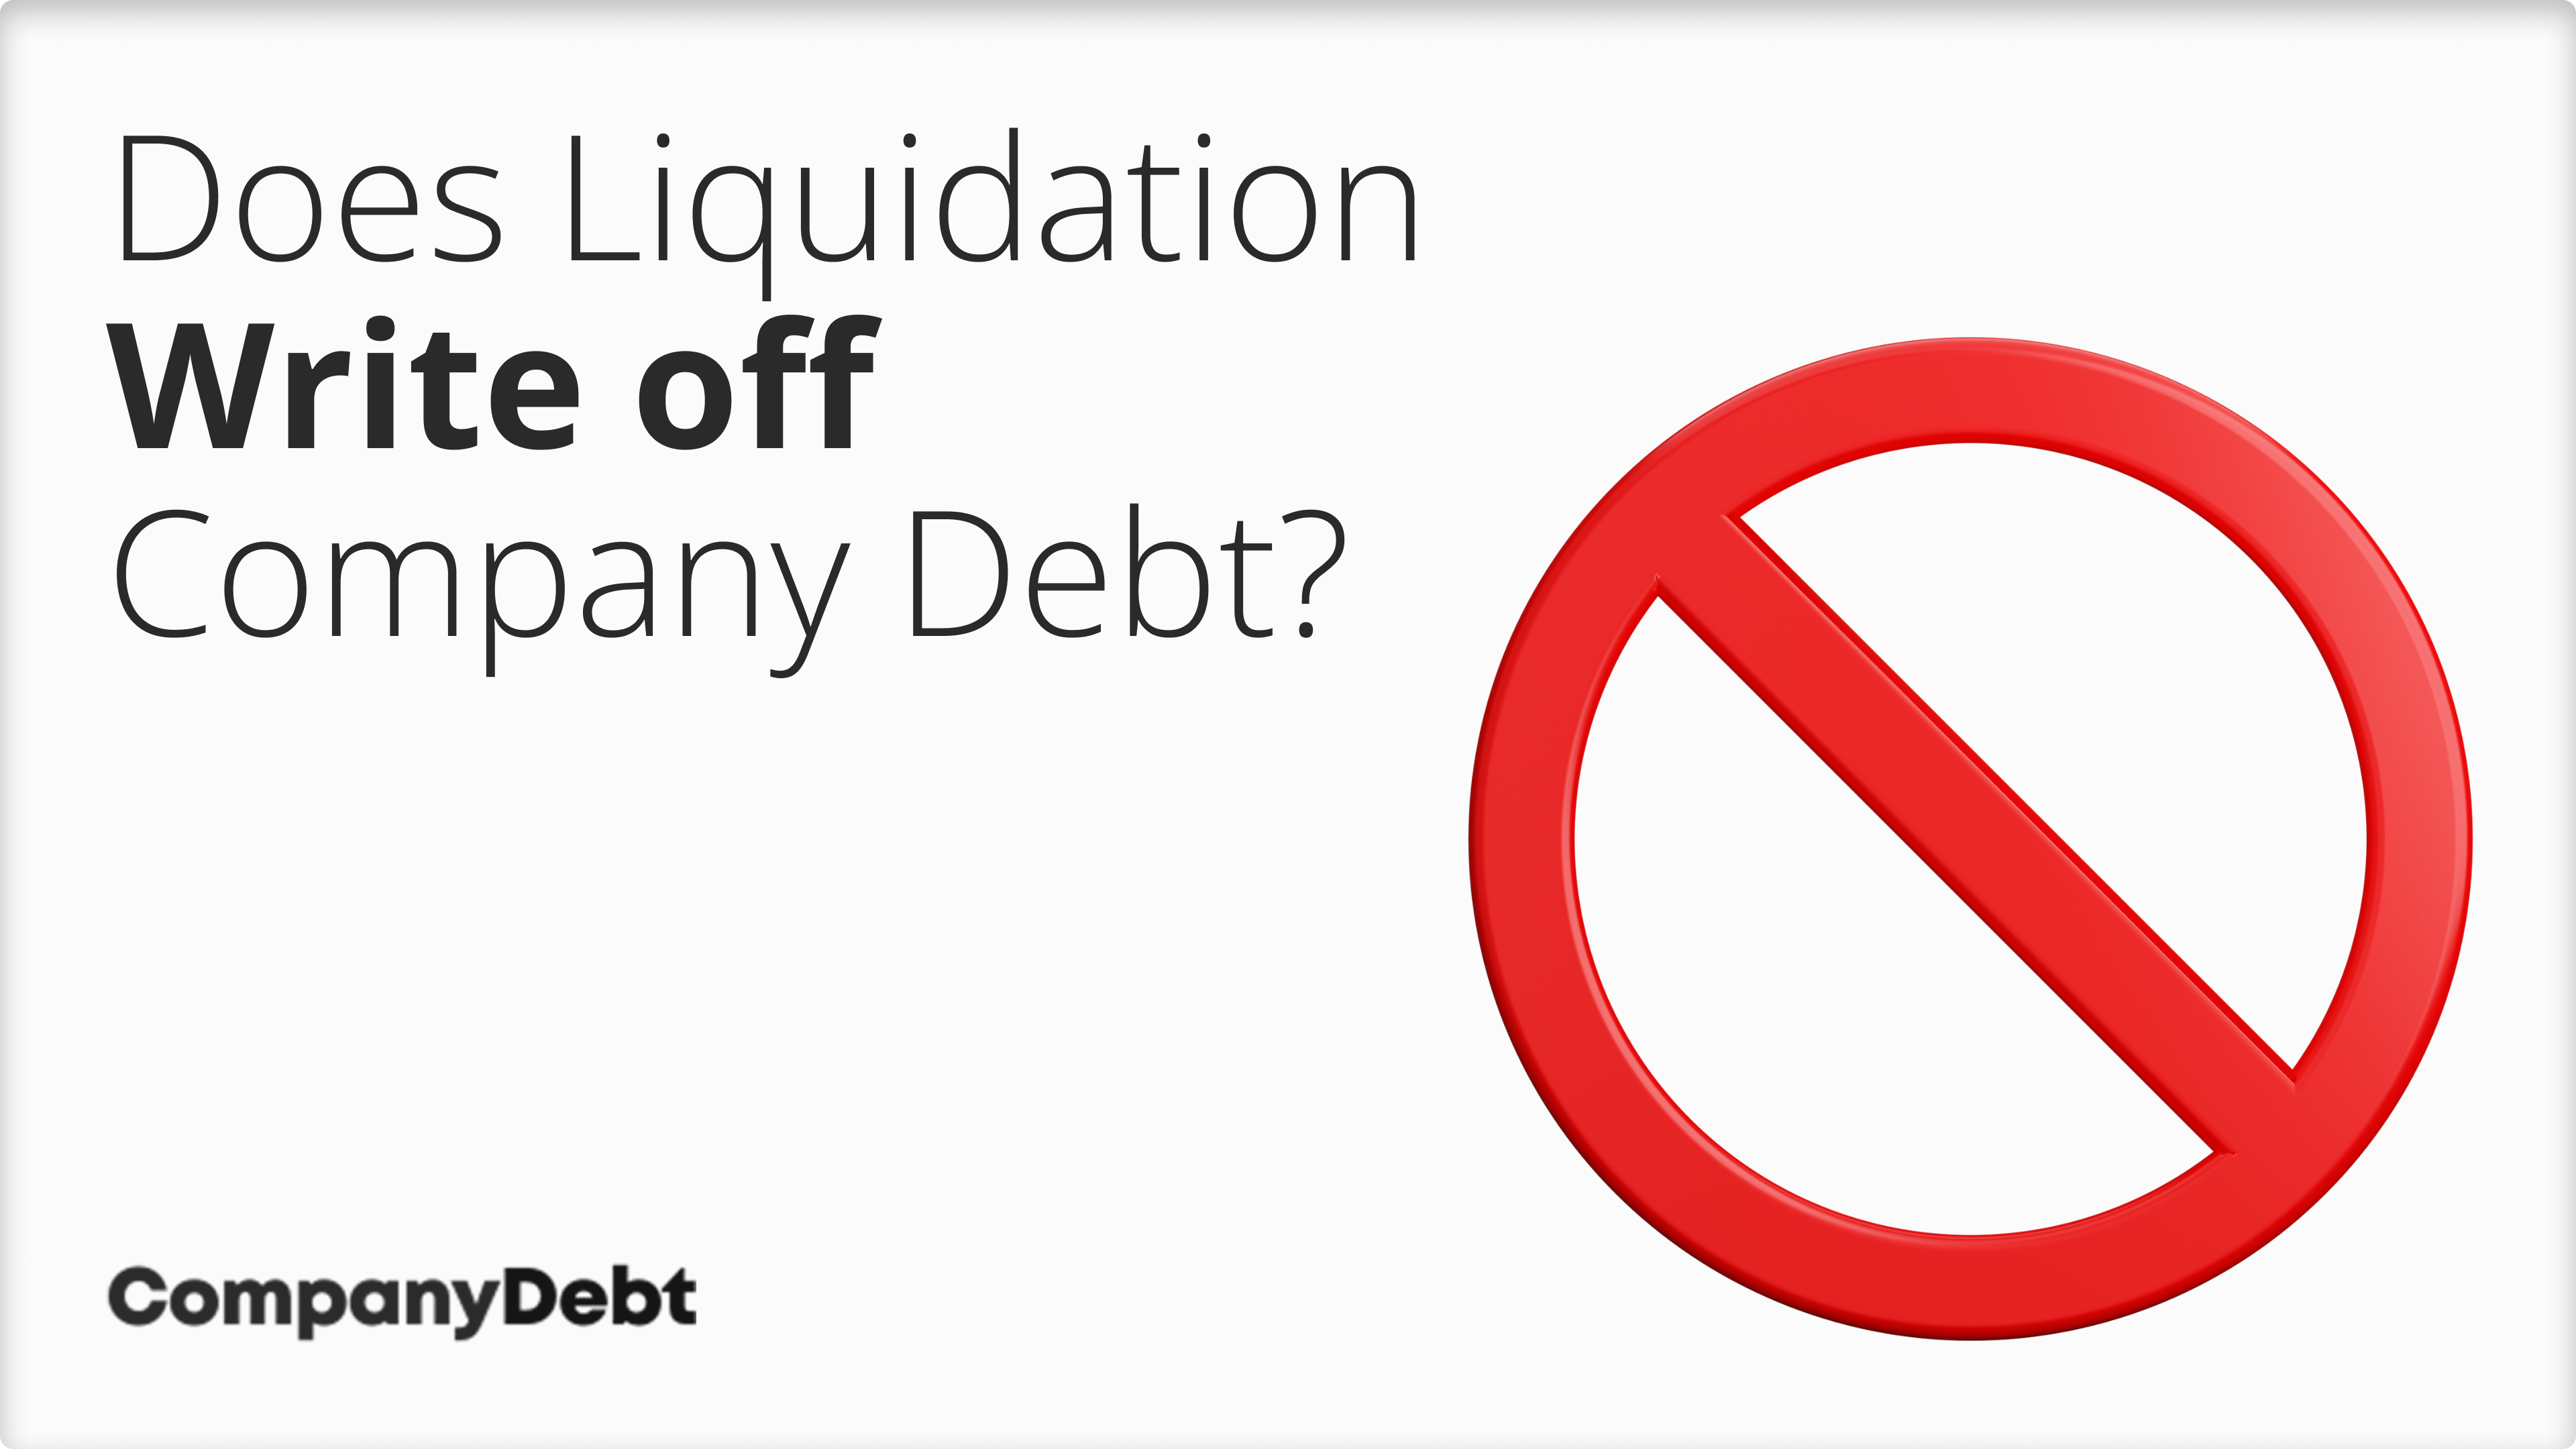 Does Liquidation Write off Company Debt?